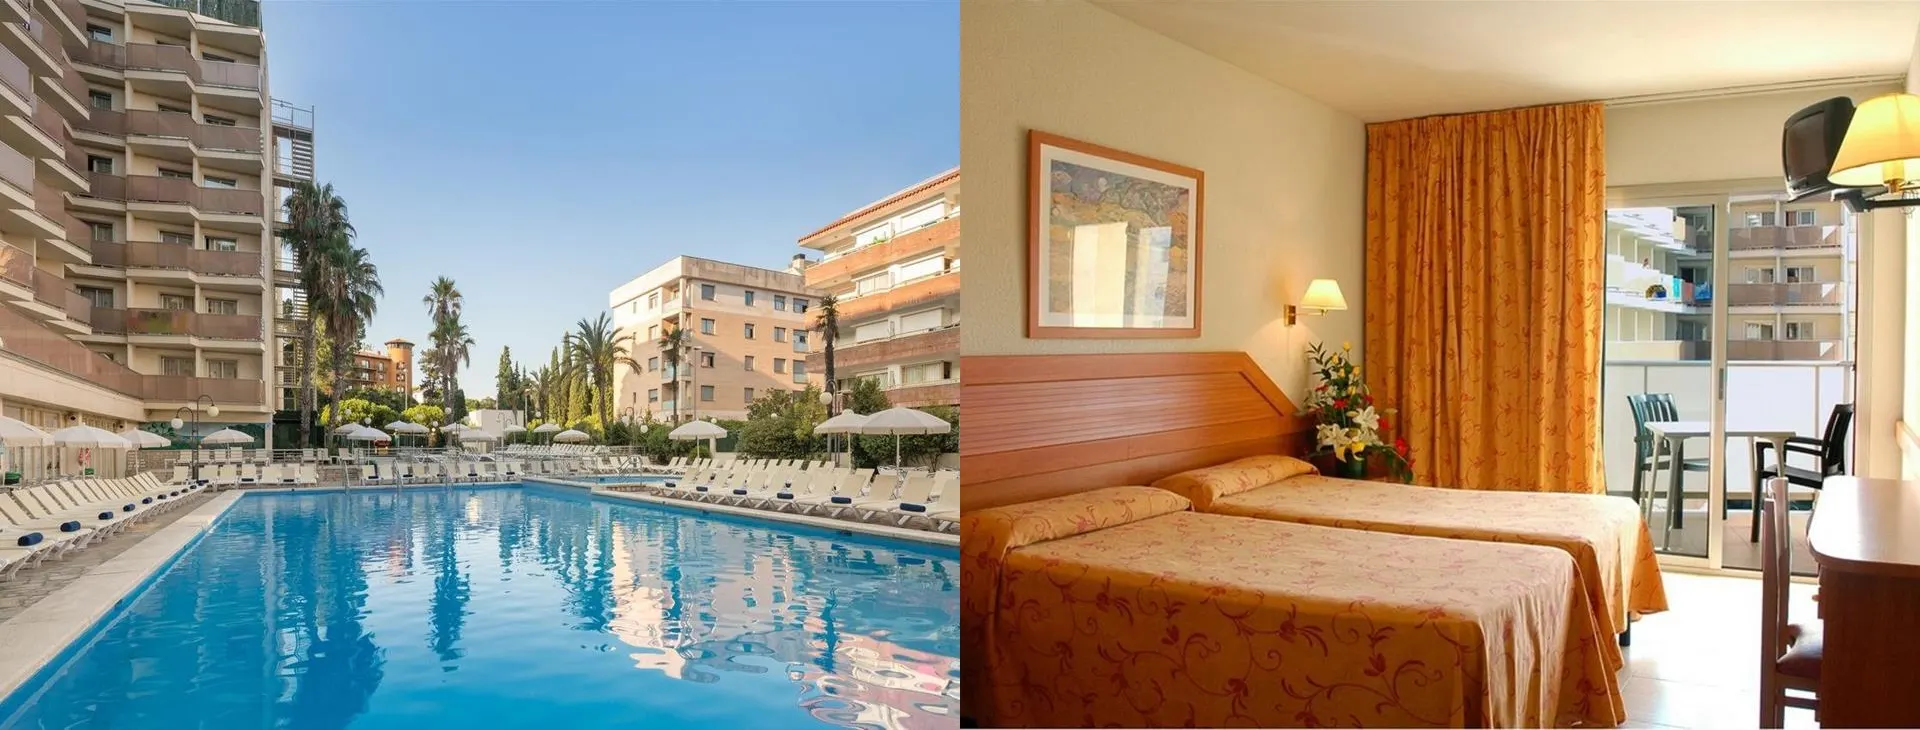 H Royal Beach - Bestil hotel i Lloret del Mar hos Spies